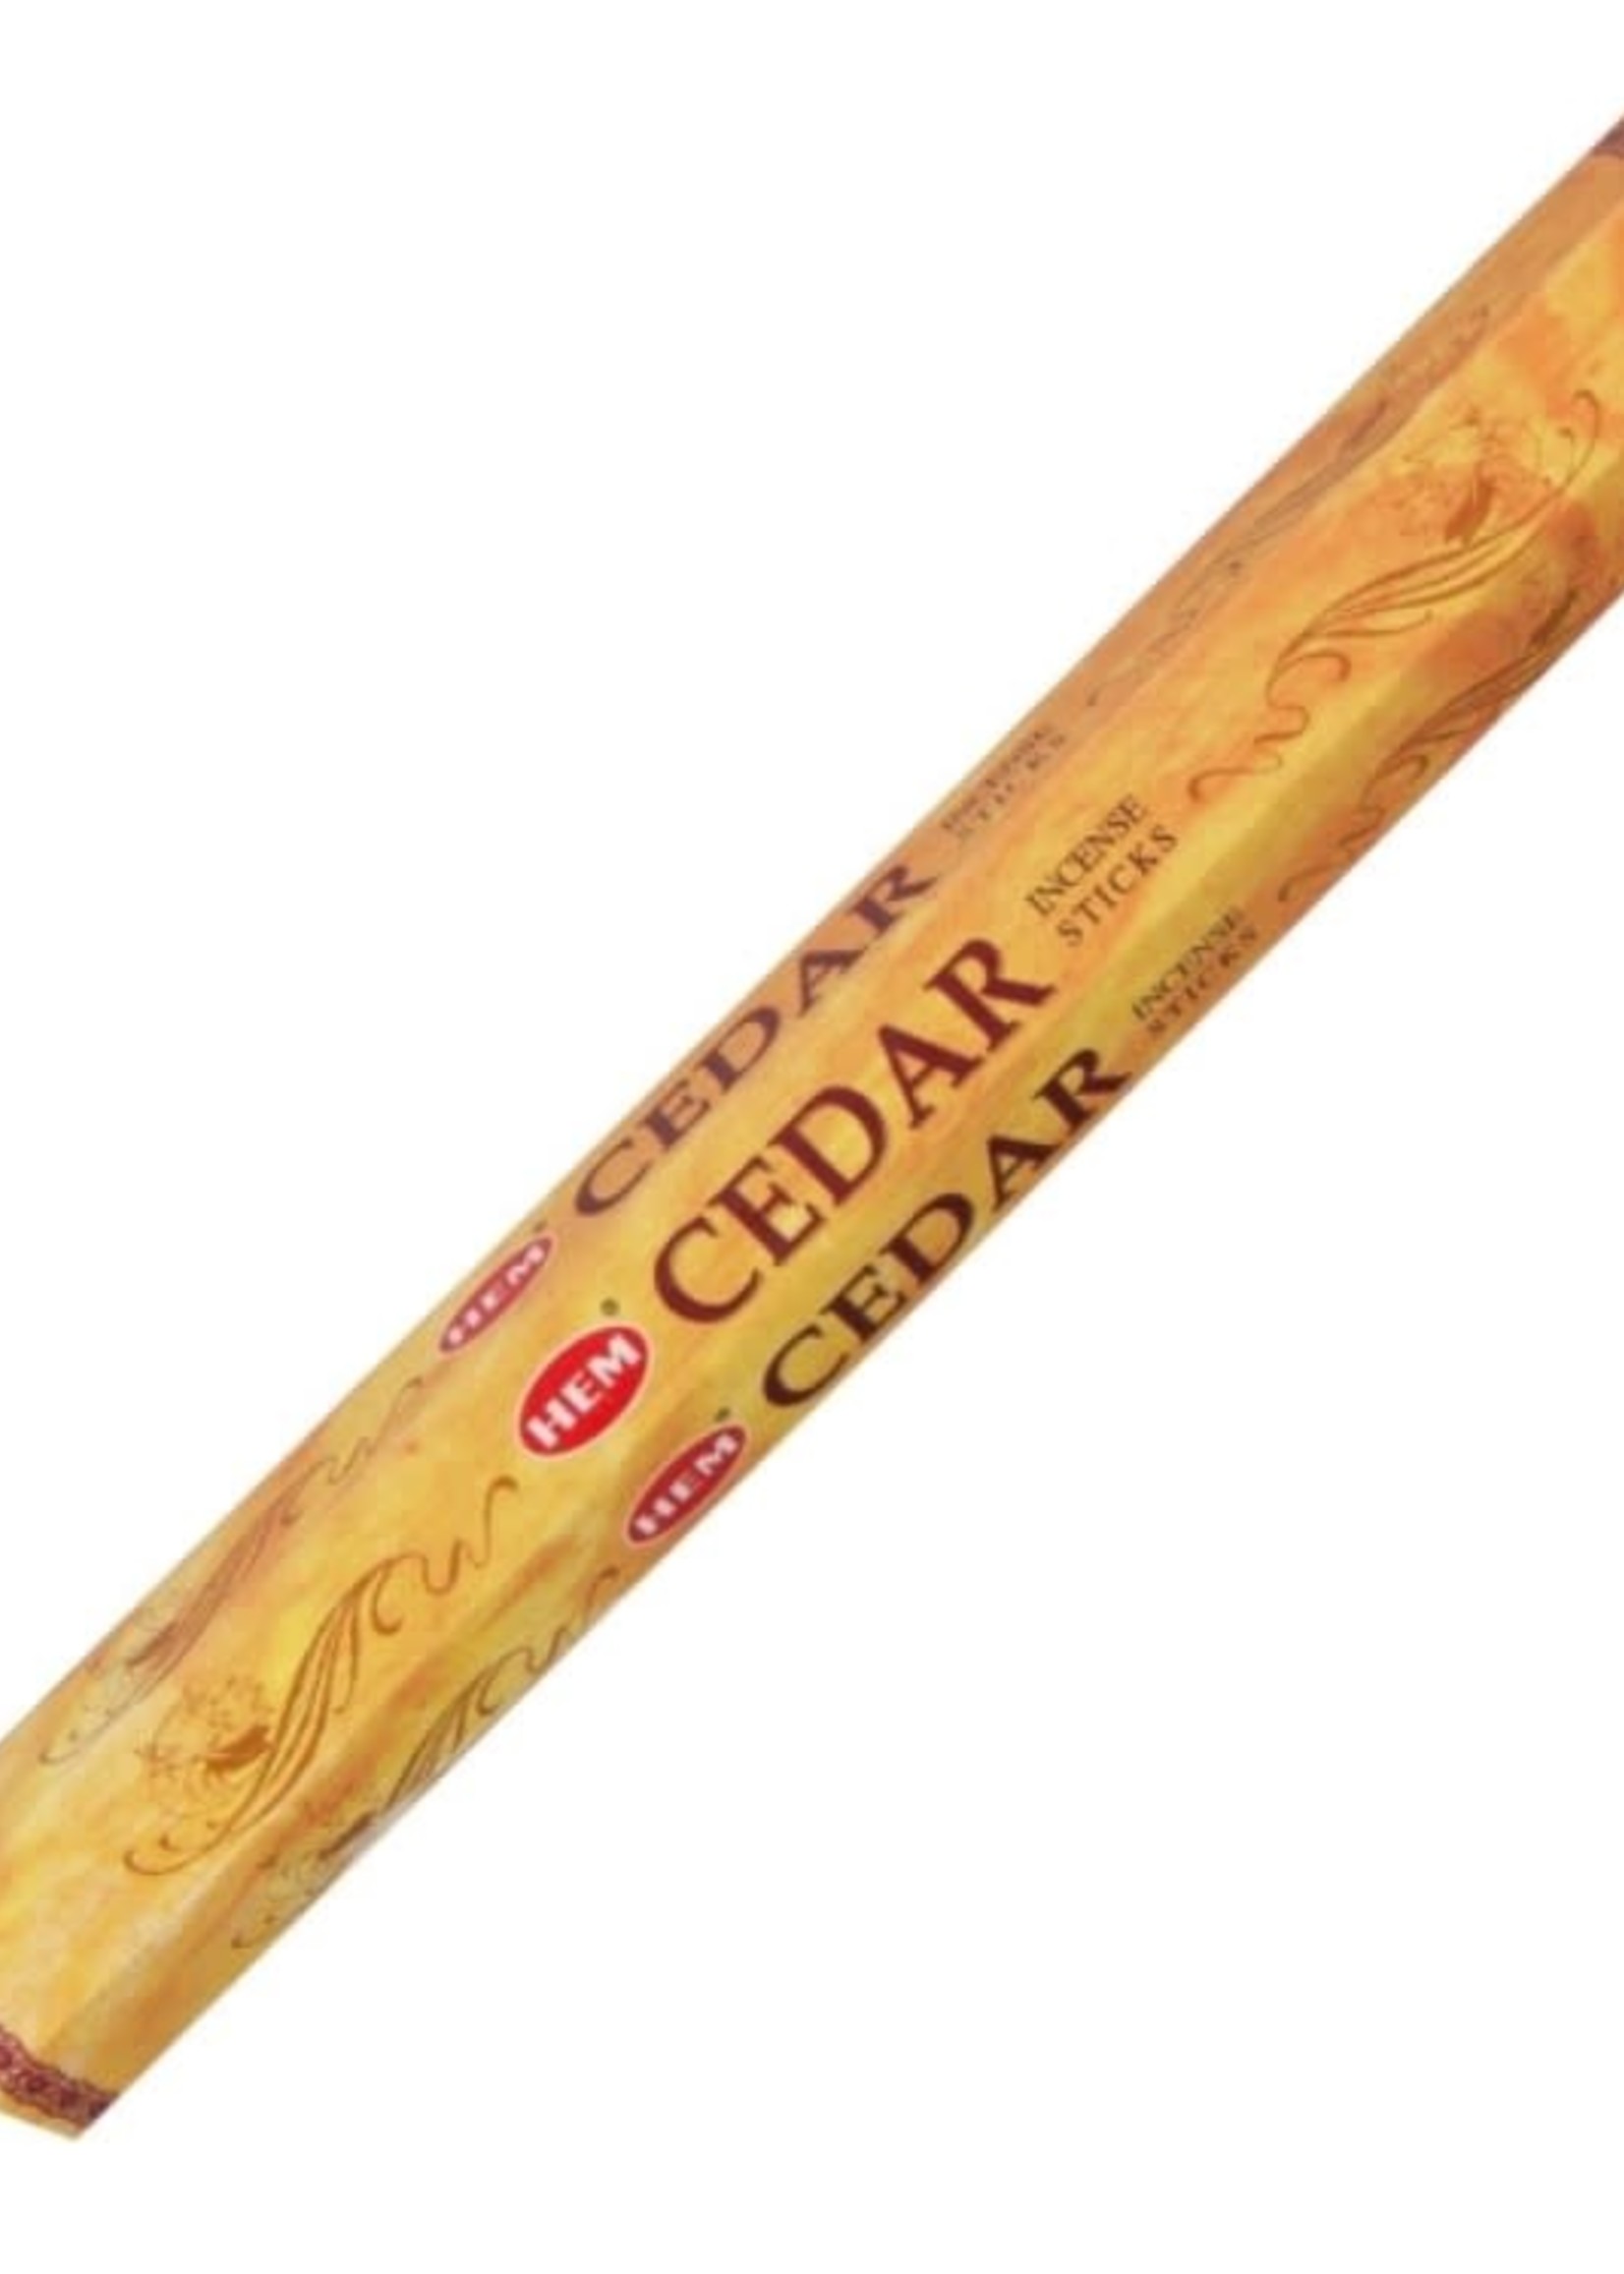 Hem 20g Incense Cedar